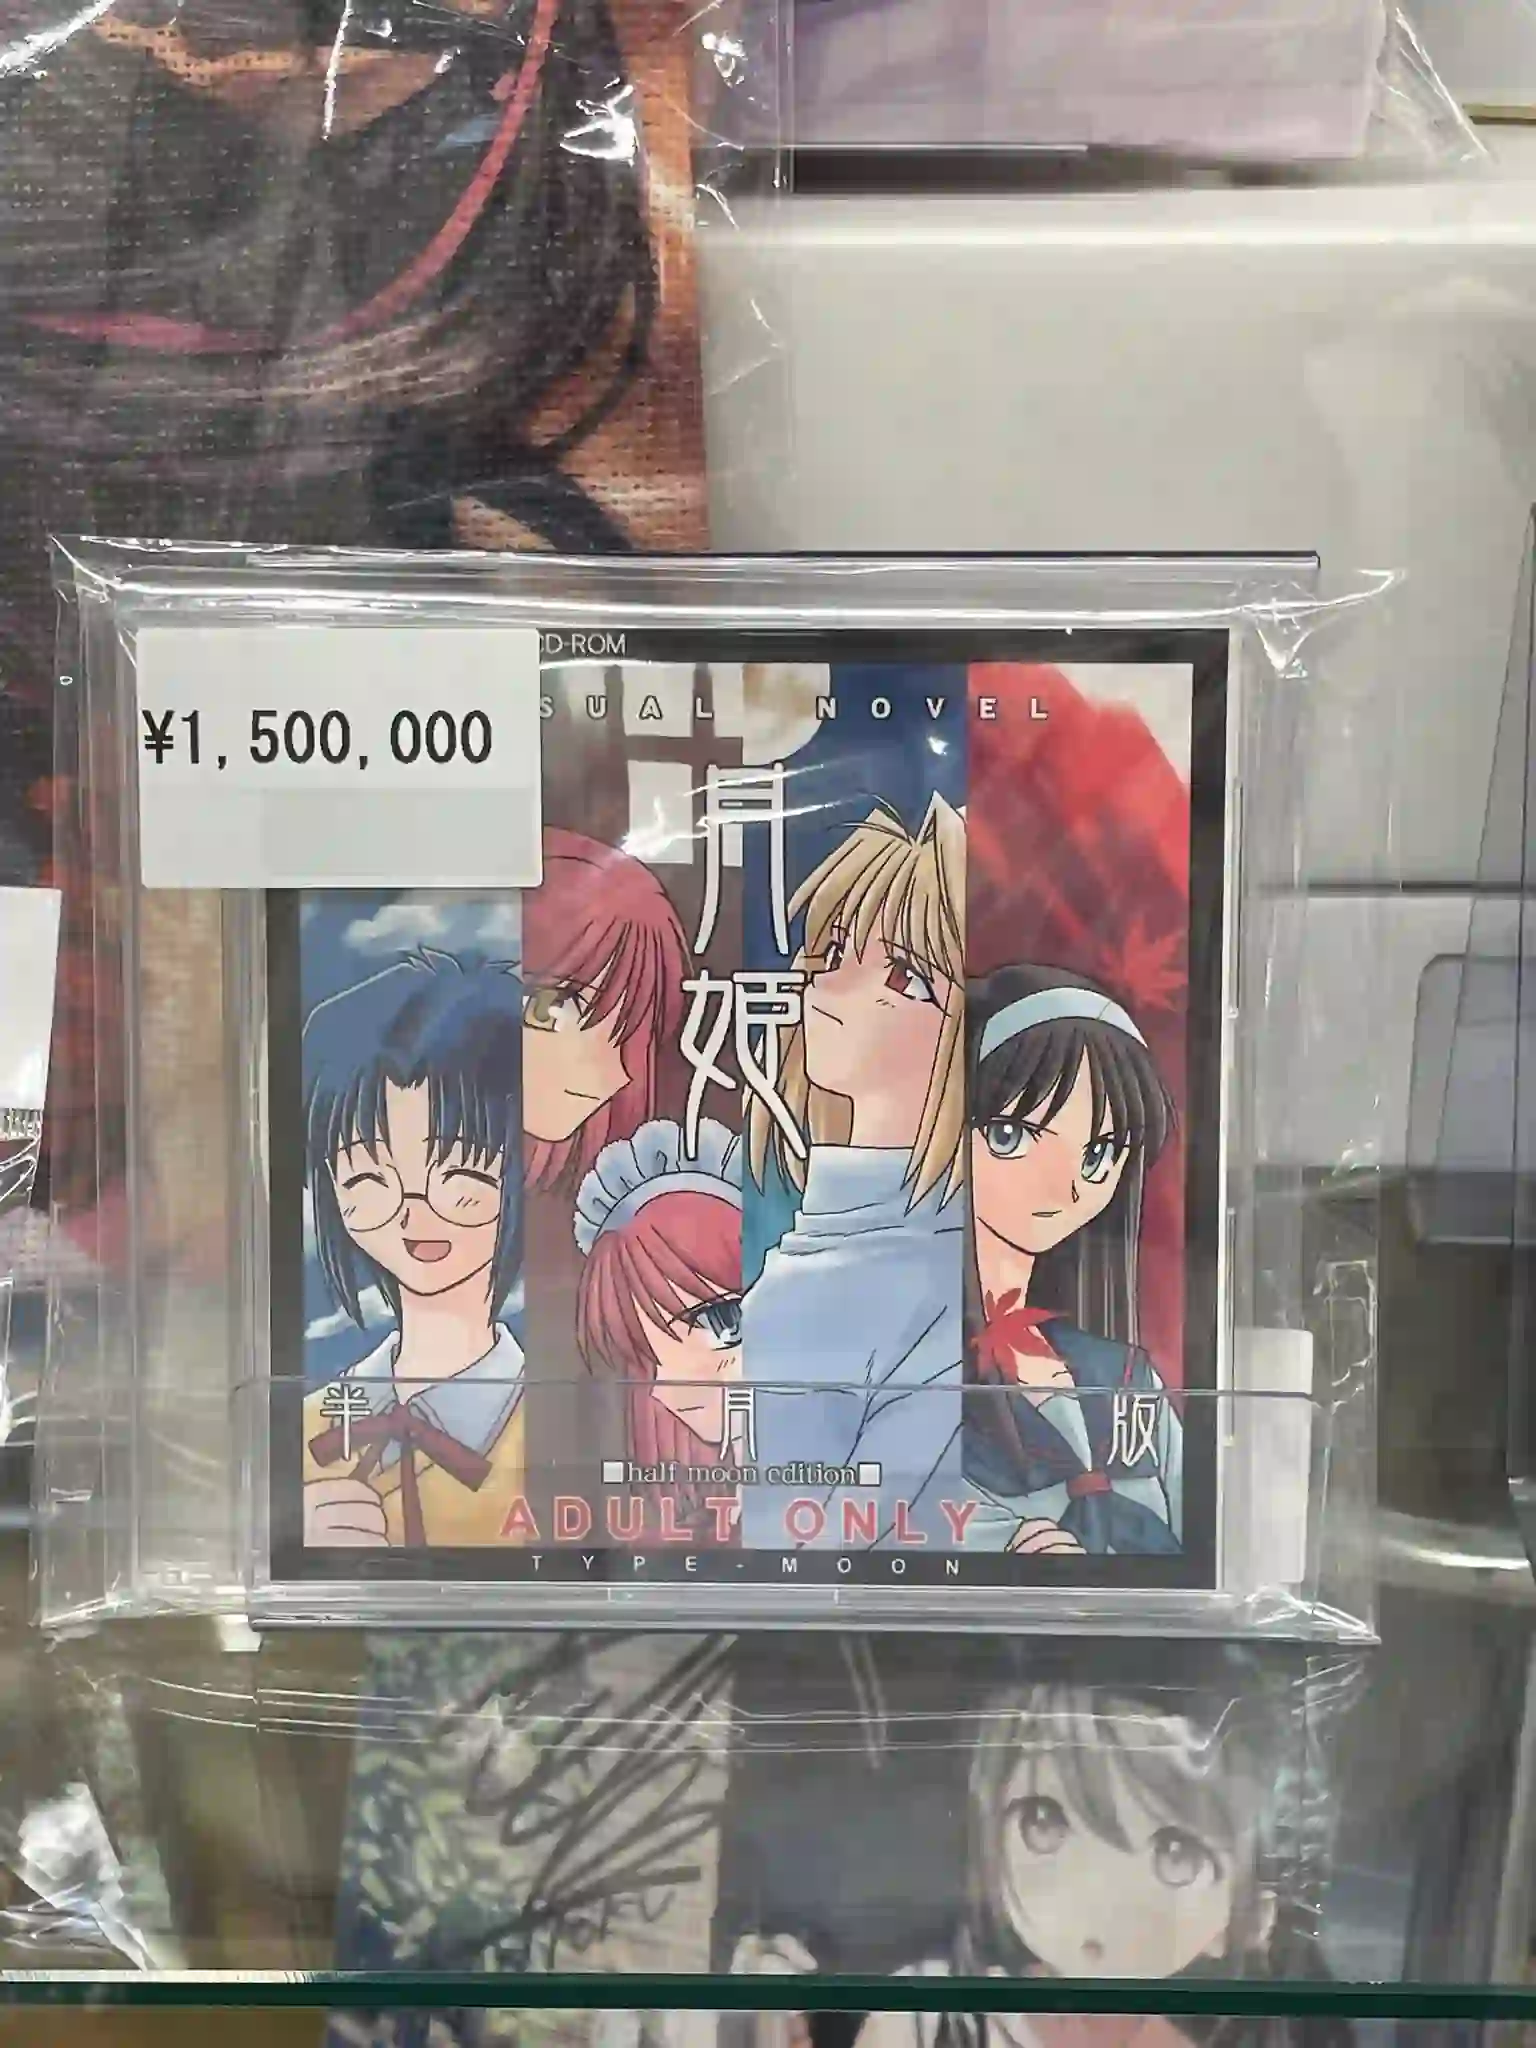 Visual novel clássica de Tsukihime: Half Moon Edition está sendo vendida a 1,5 milhões de ienes